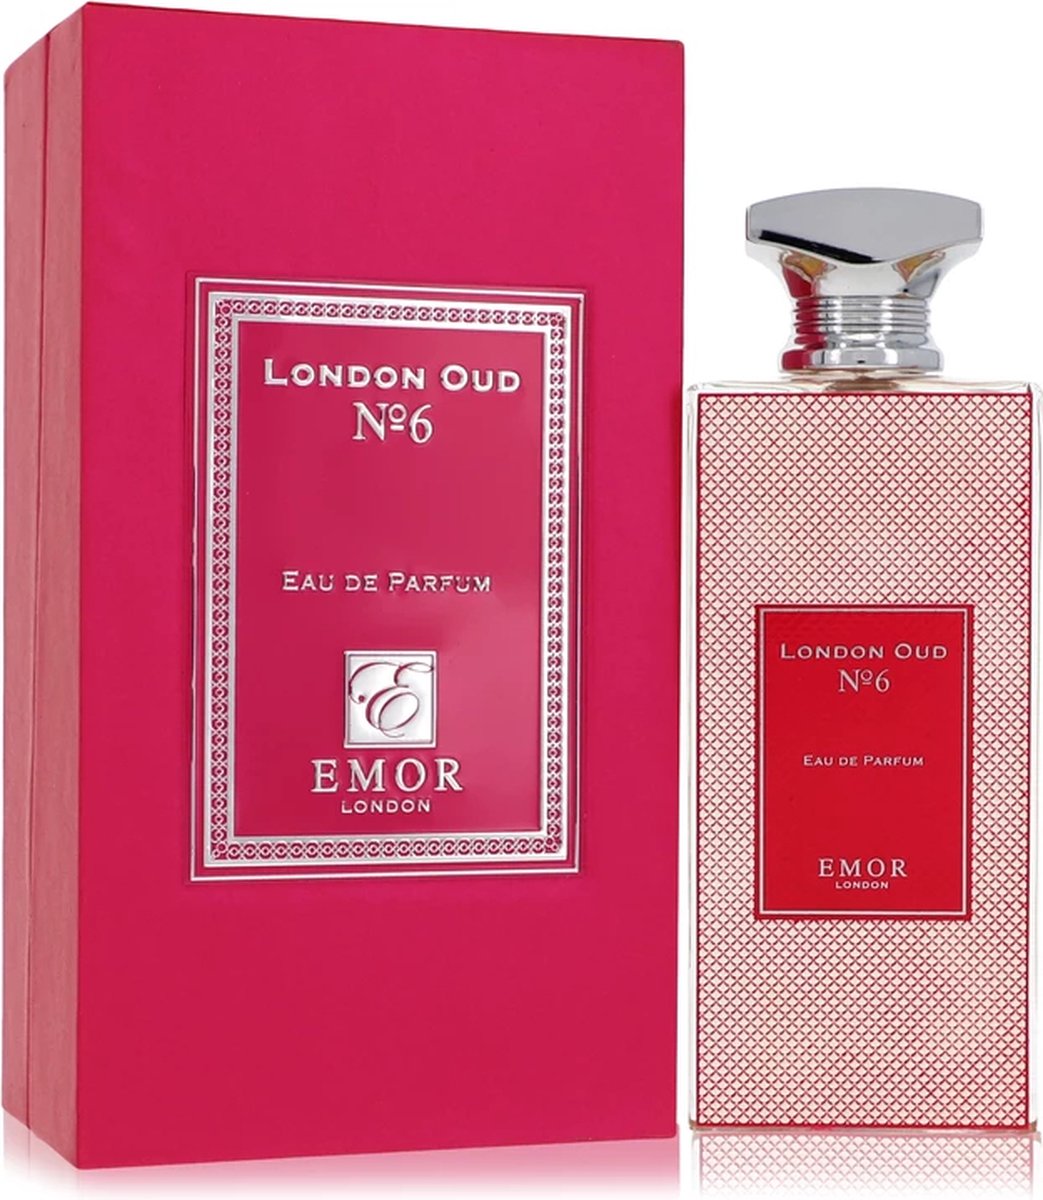 Emor London Oud No. 6 eau de parfum spray 125 ml